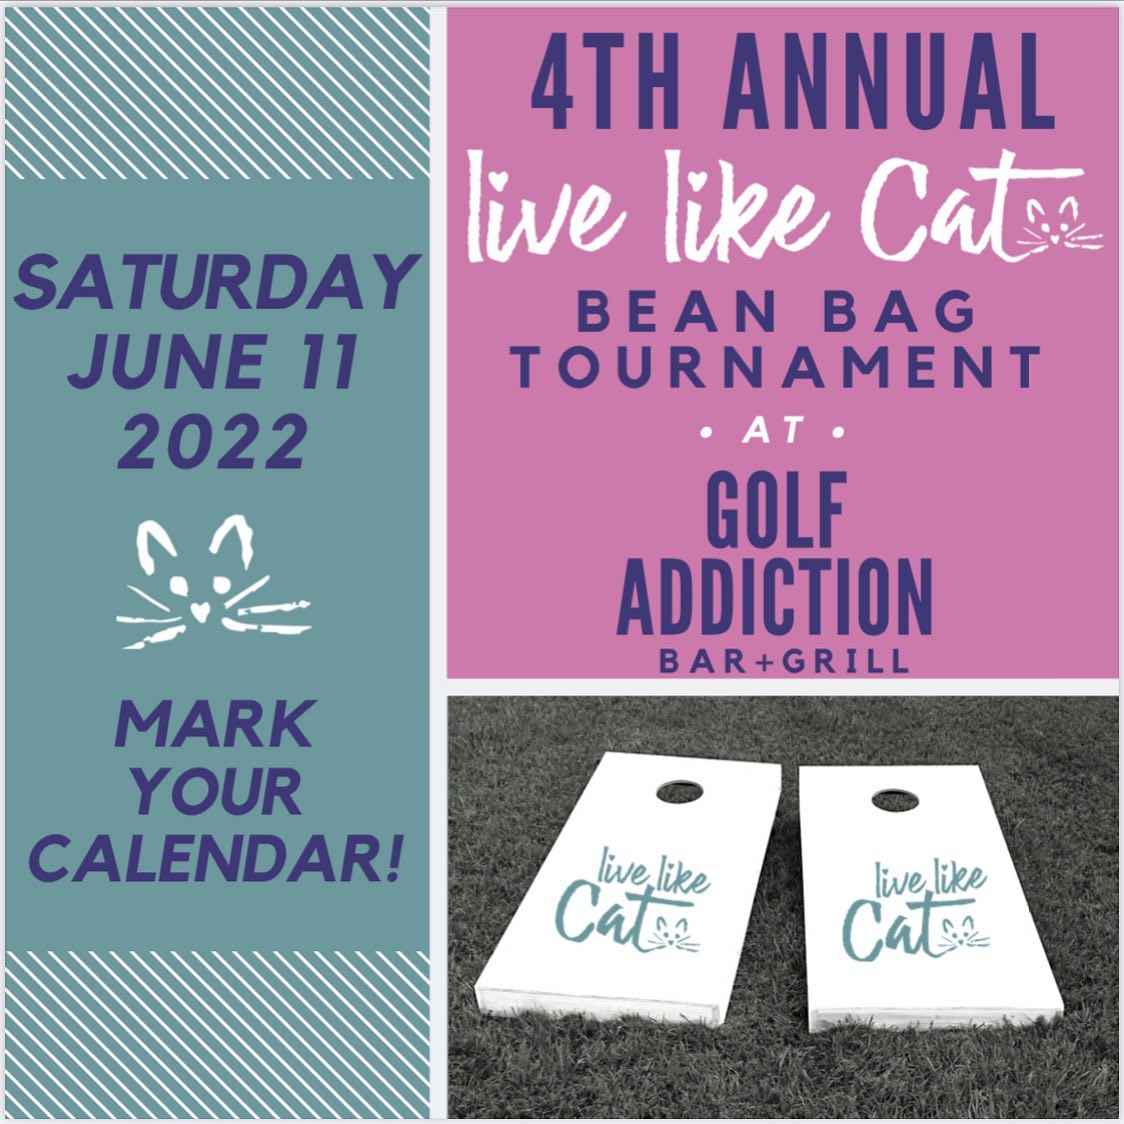 4th Annual Live Like Cat Bean Bag Tournament